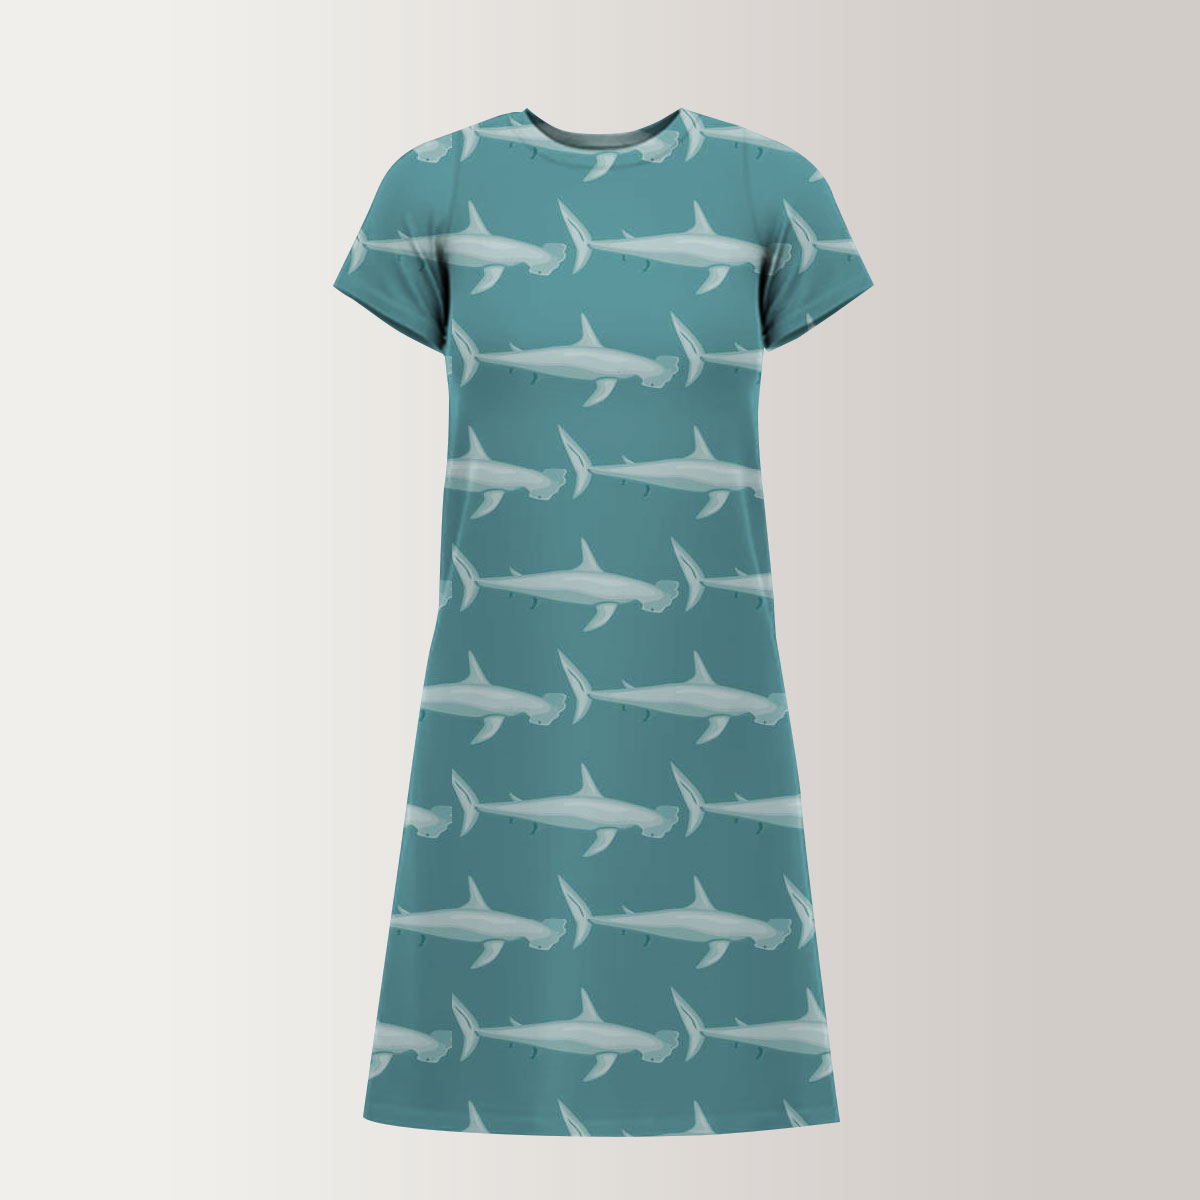 Sea Hammerhead Shark T-Shirt Dress